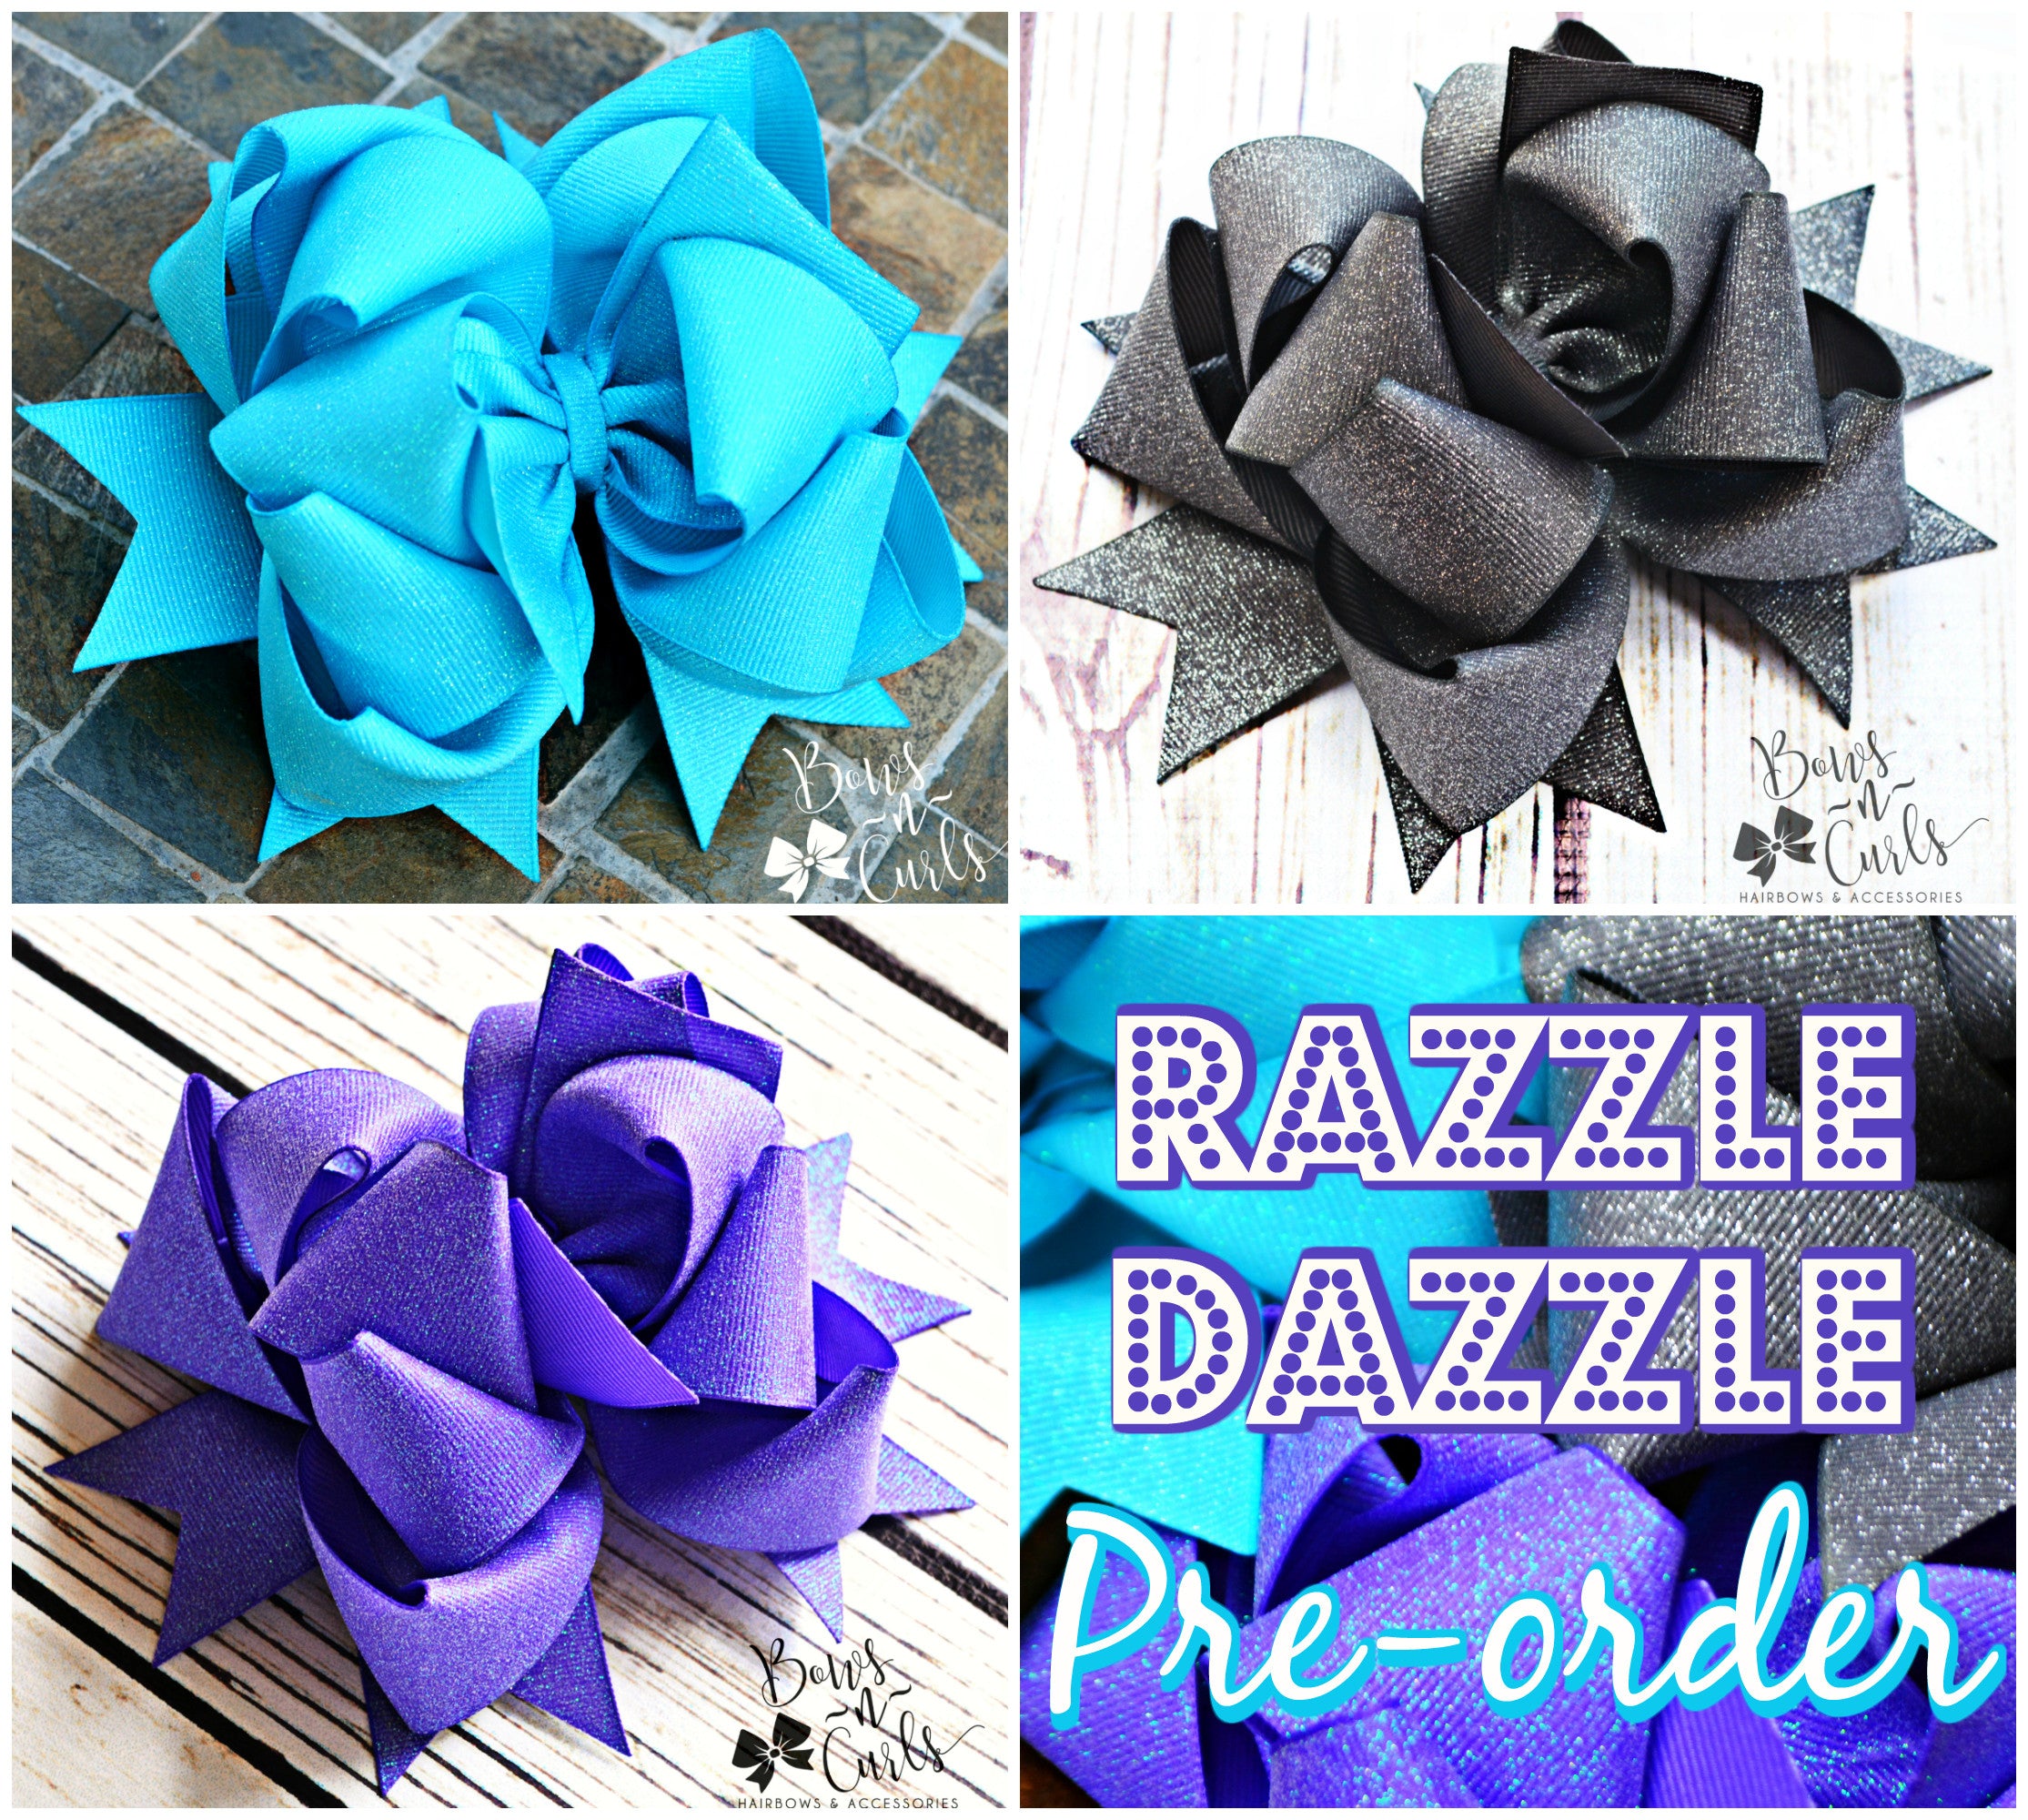 Razzle Dazzle Pre-Order - Delphinium (Purple), Gun Metal and Turquoise